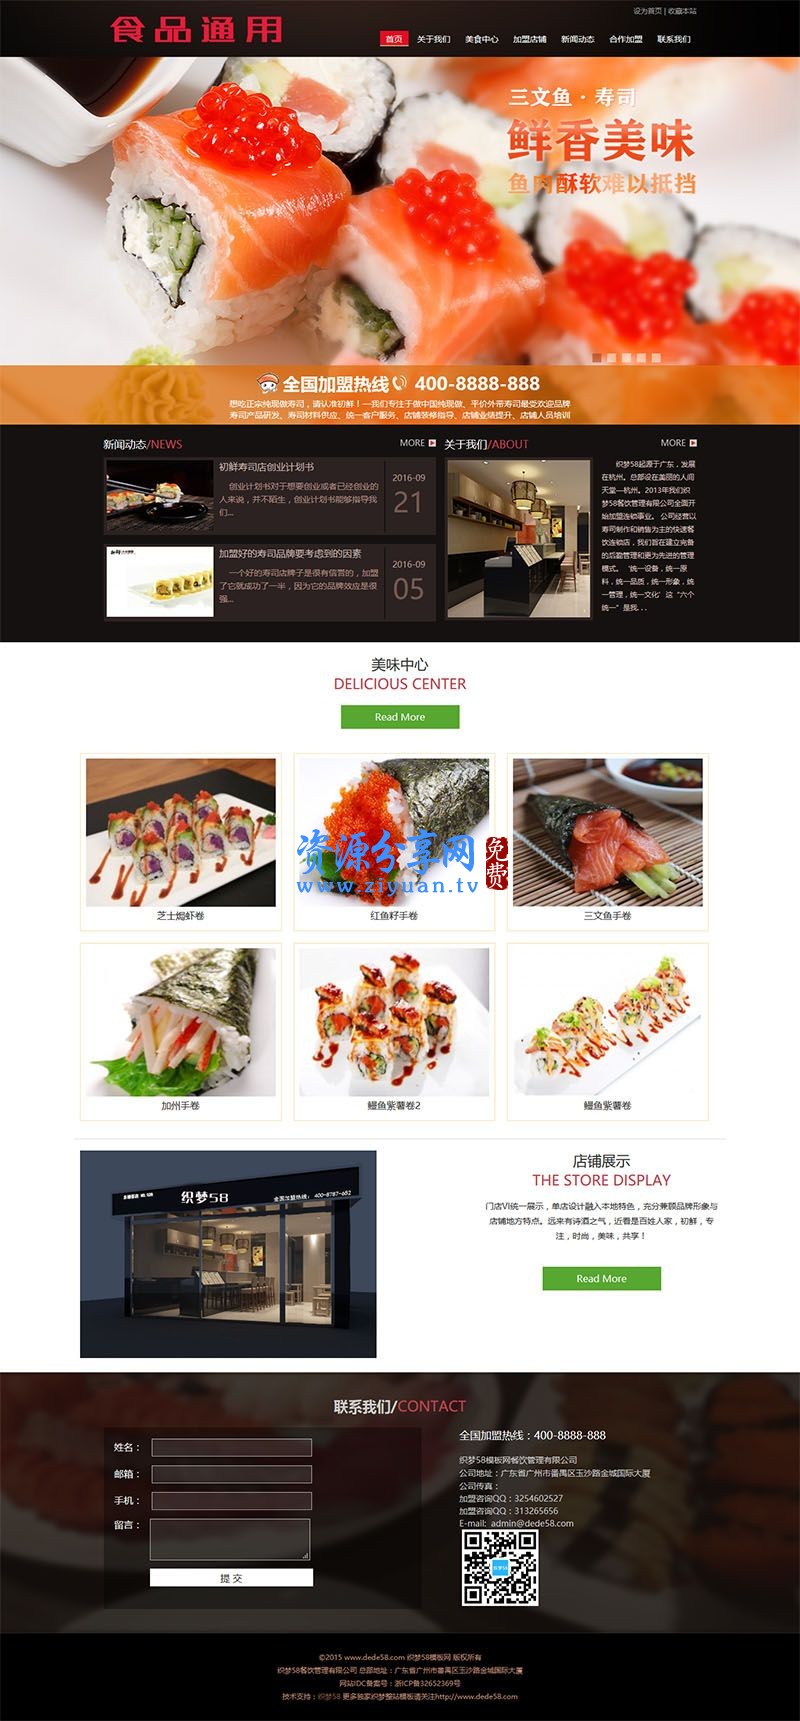 SEO 优化织梦 dedecms 寿司料理餐饮管理企业网站模板